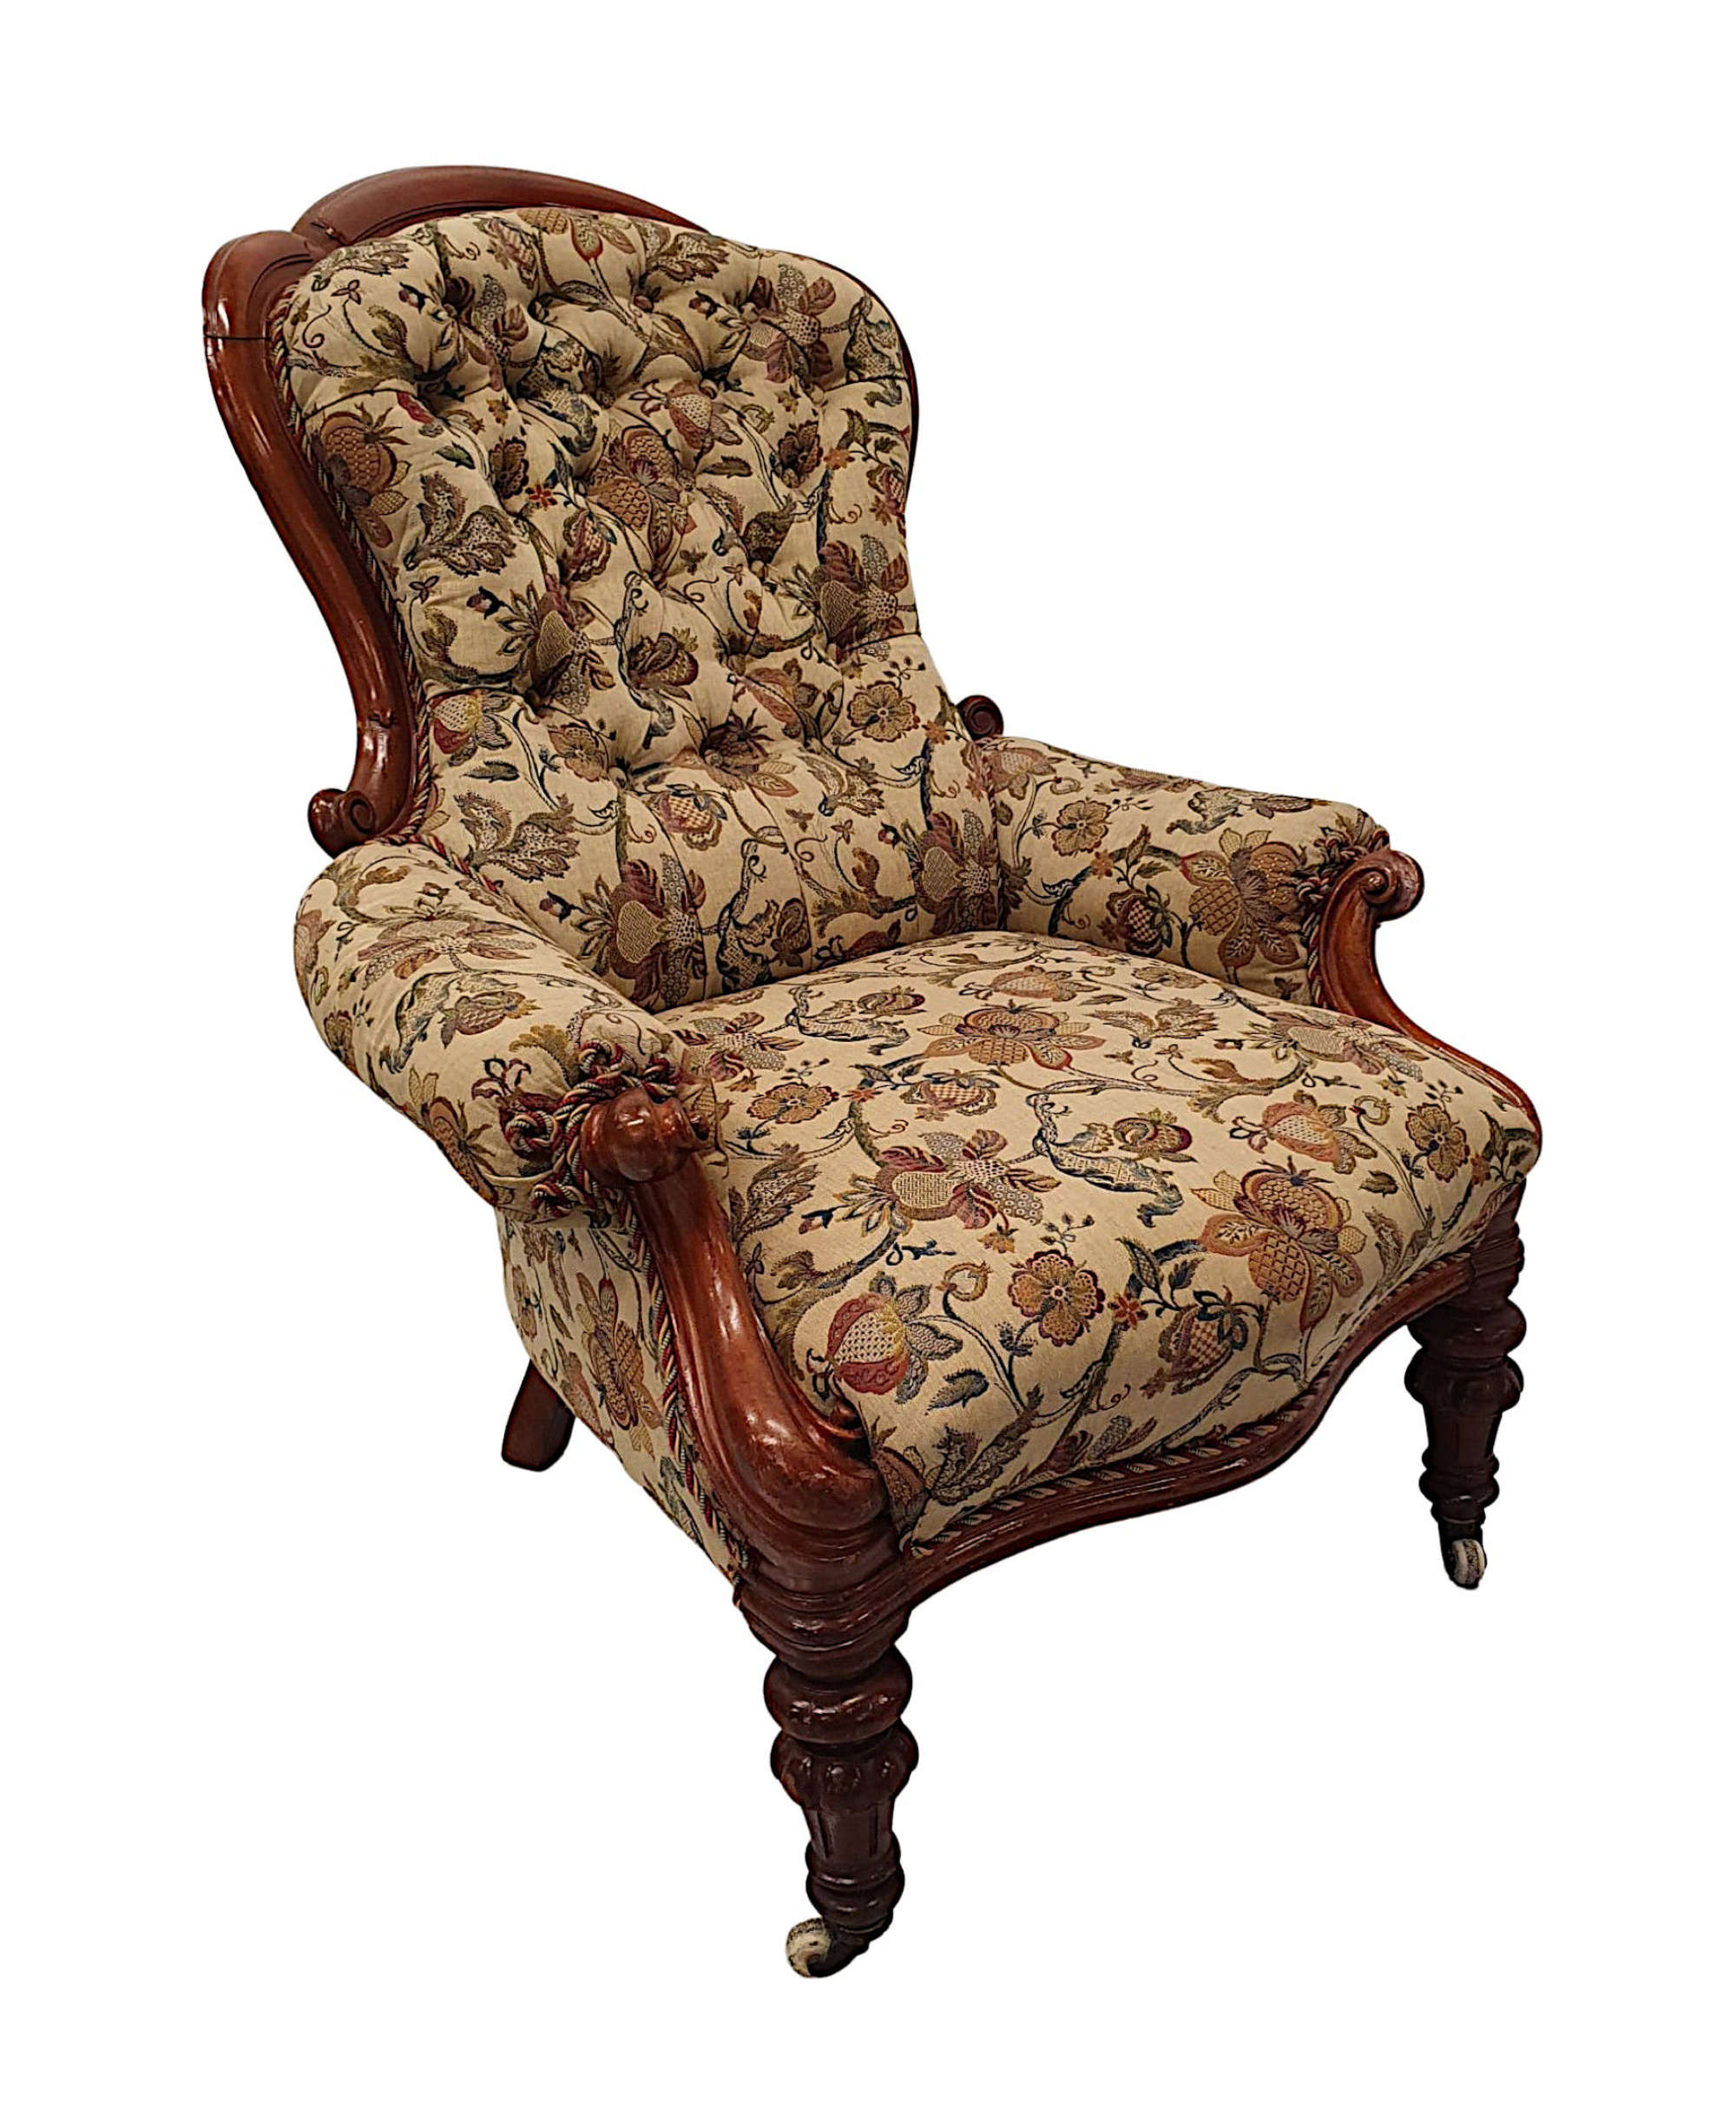 A Gorgeous 19th Century Antique Armchair